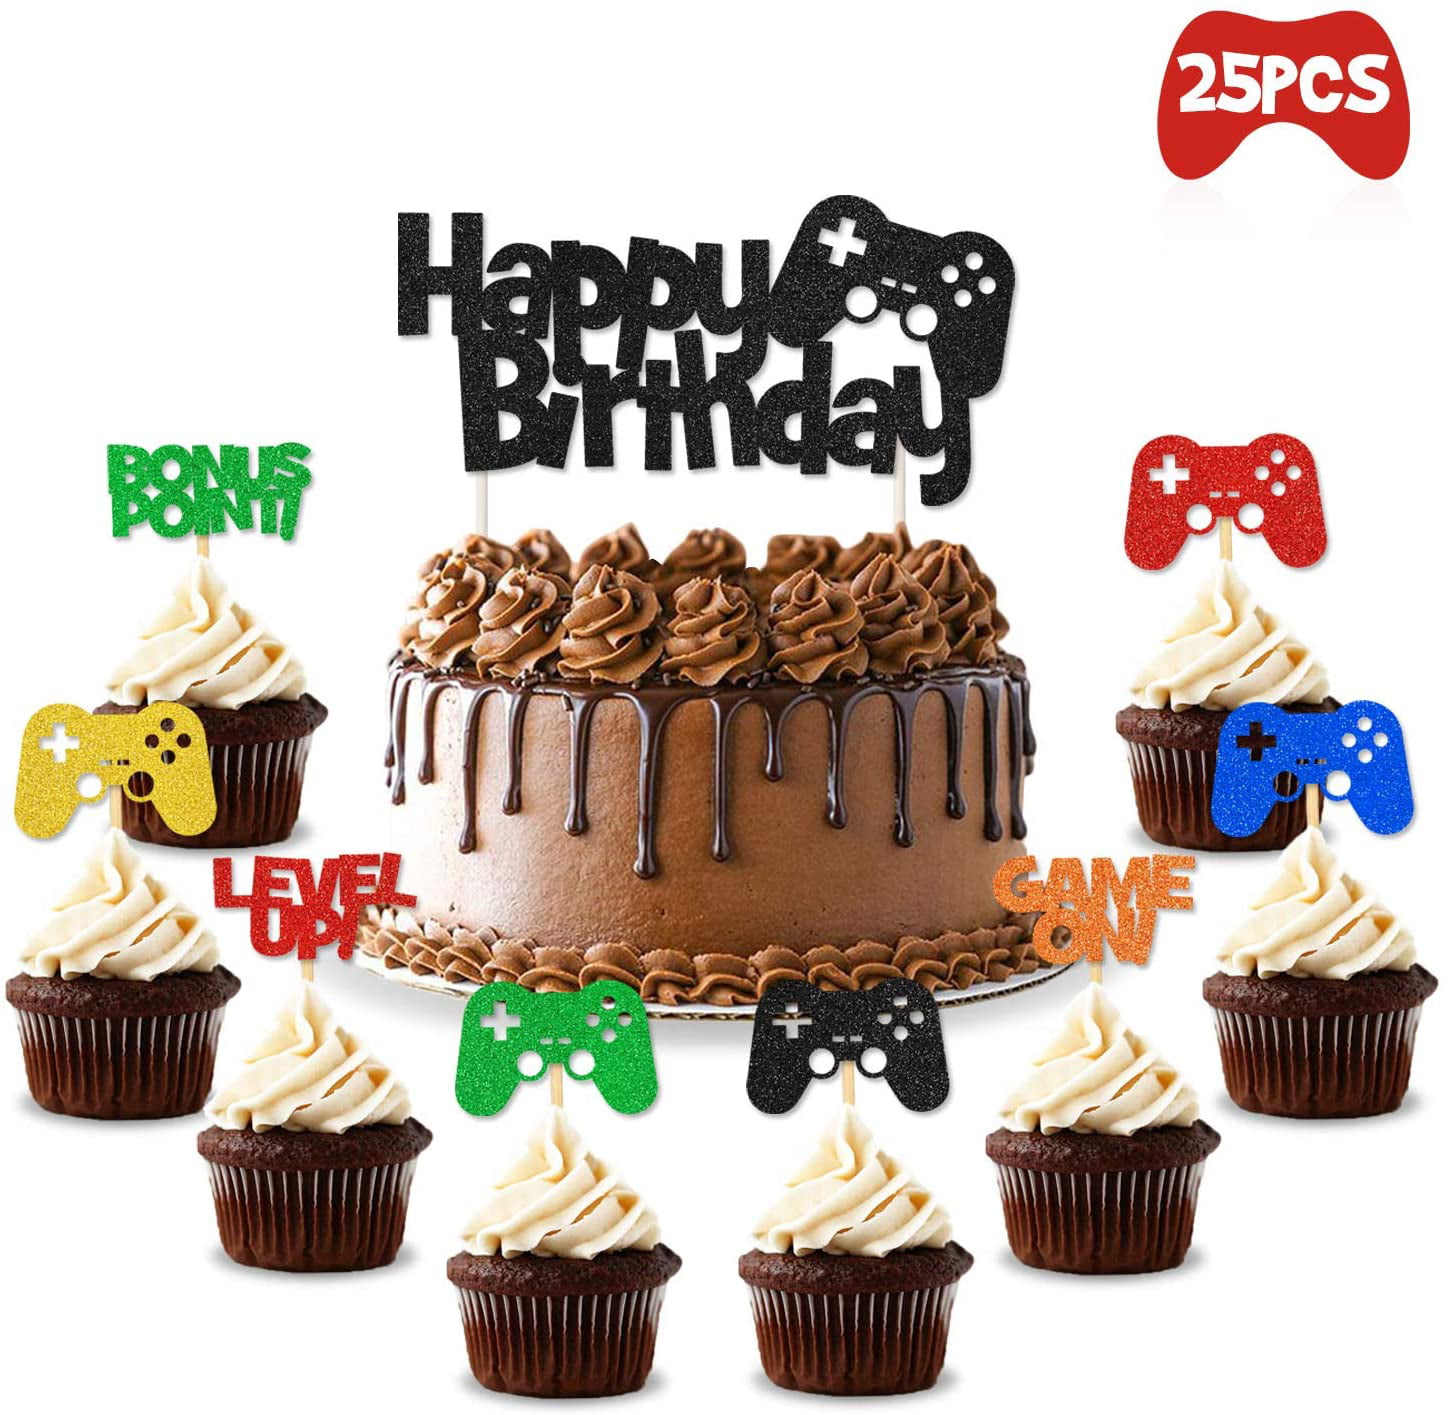 Happy Twelfth Birthday Cake Decor,Game Themed Party Docor Video Game Happy 12th Birthday Cake Topper Game Controllers Happy Birthday Cake Decorations 